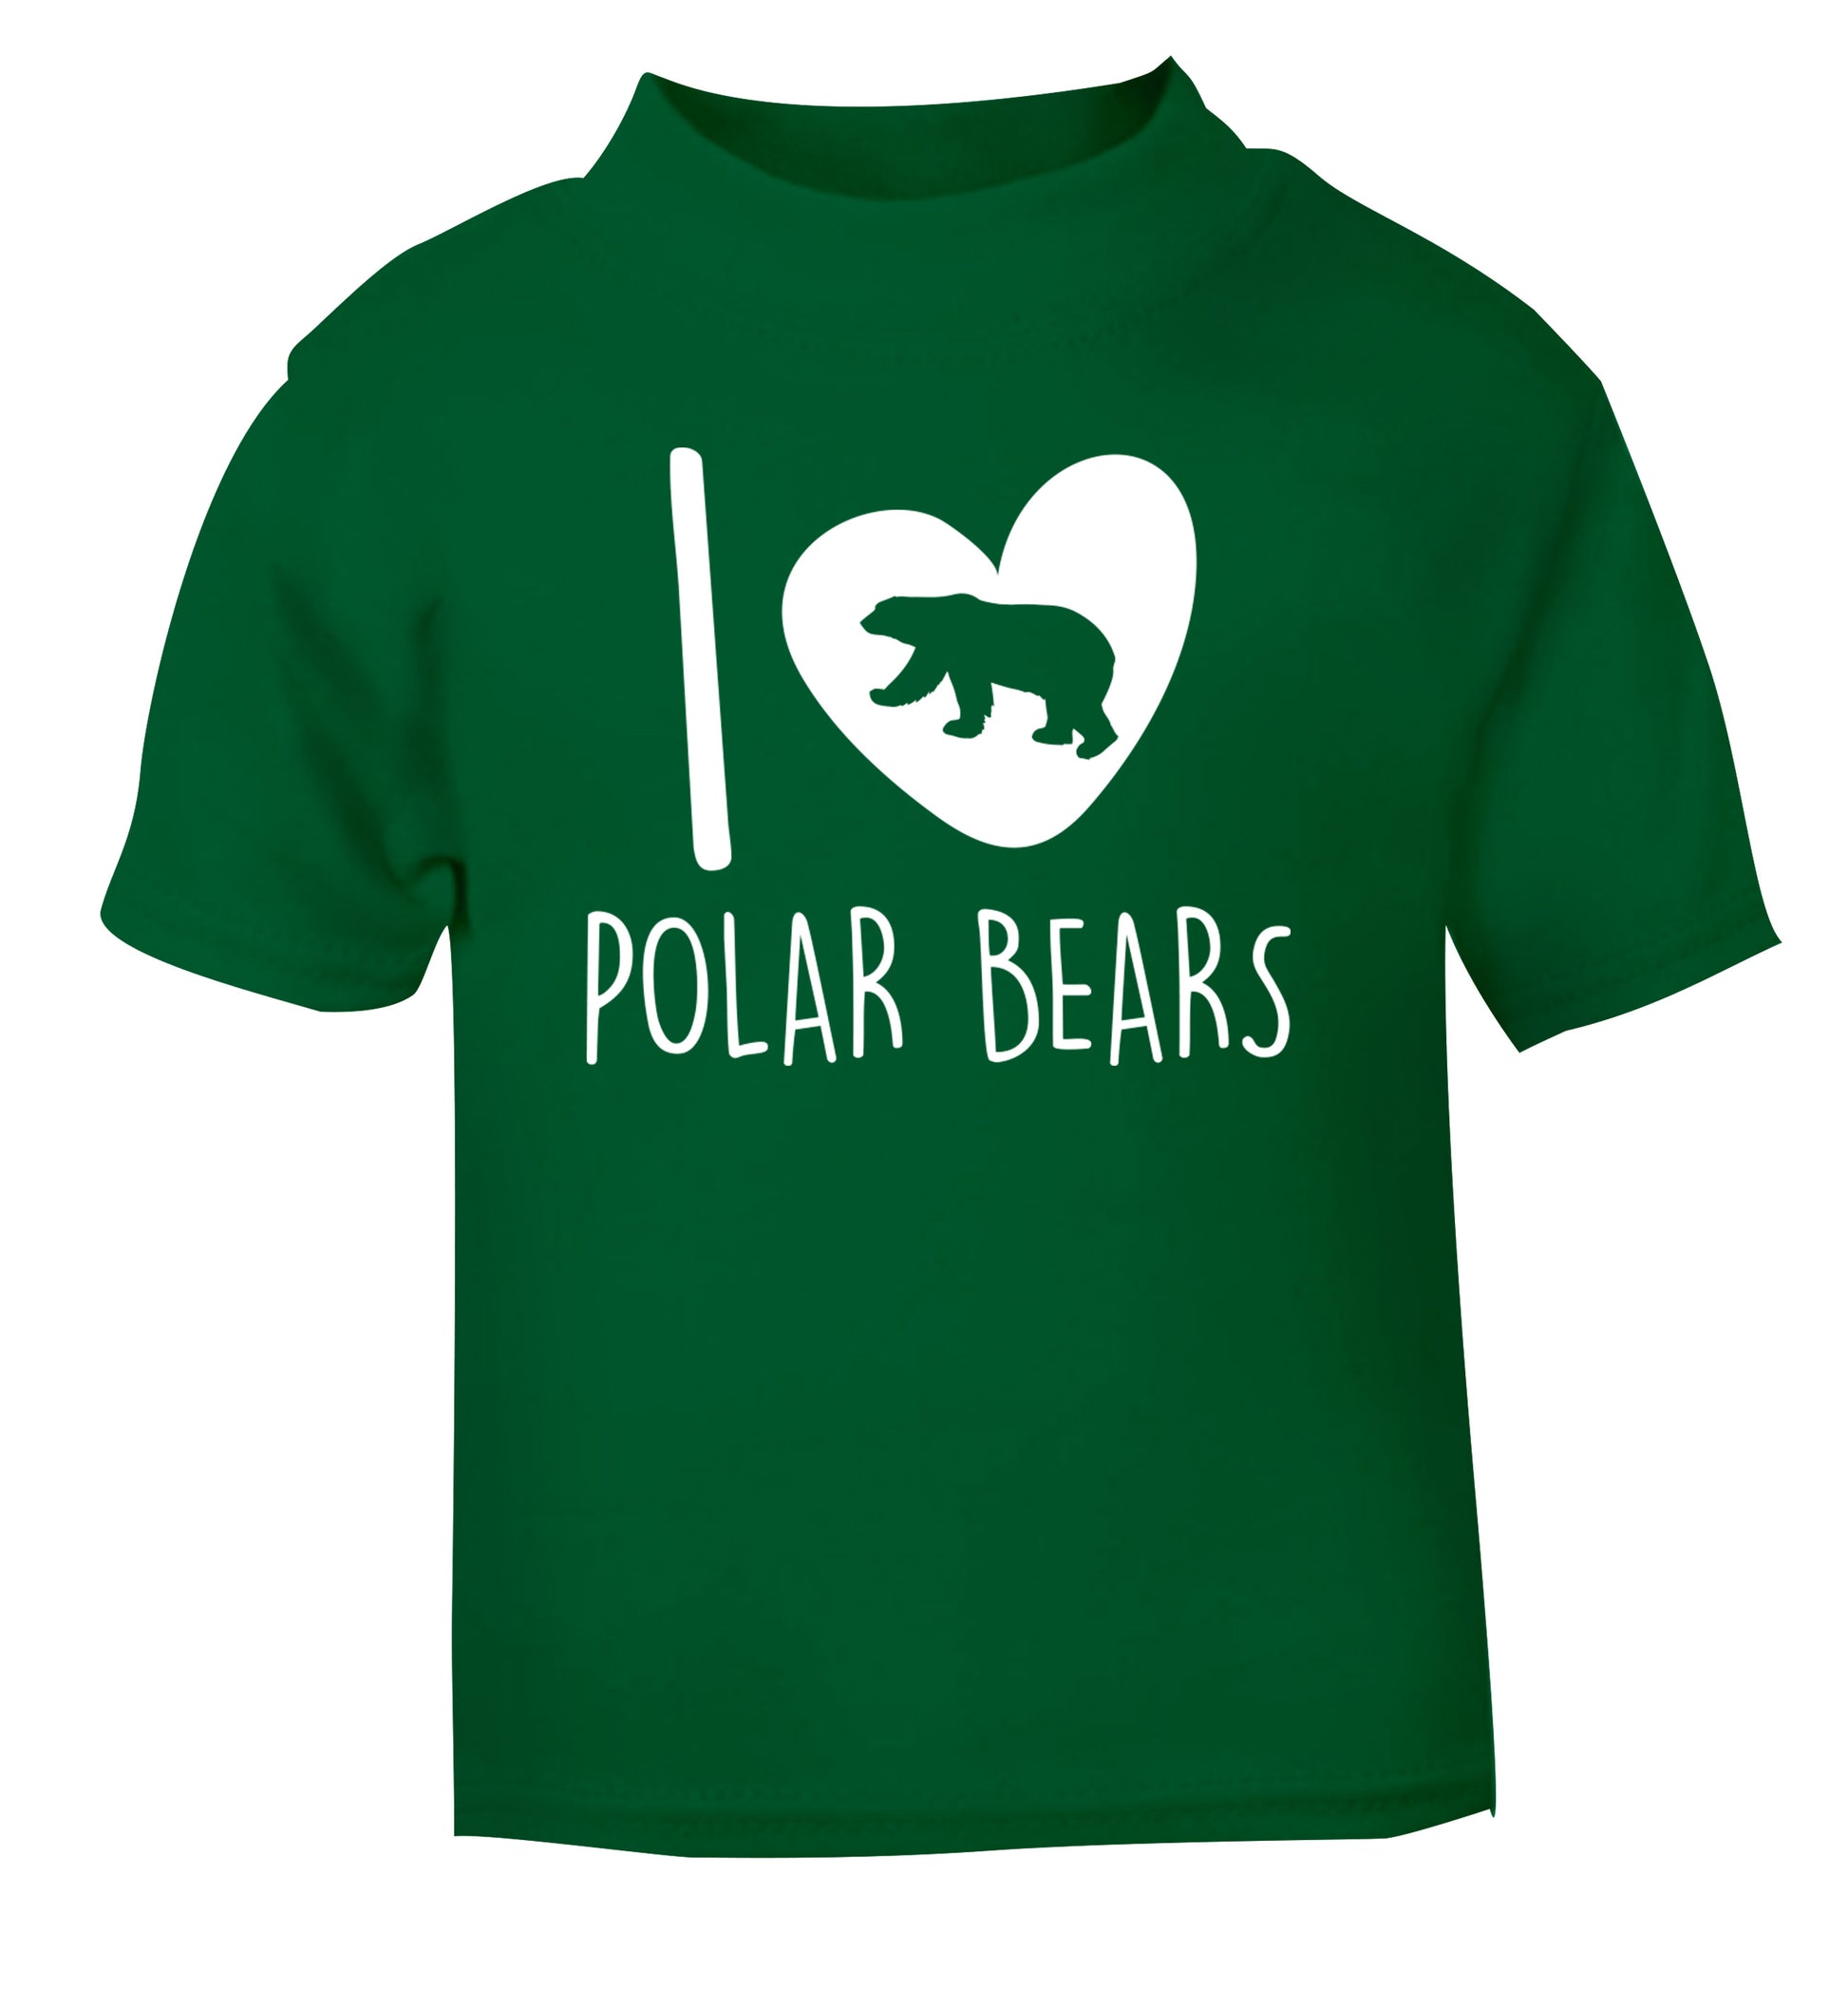 I Love Polar Bears green Baby Toddler Tshirt 2 Years